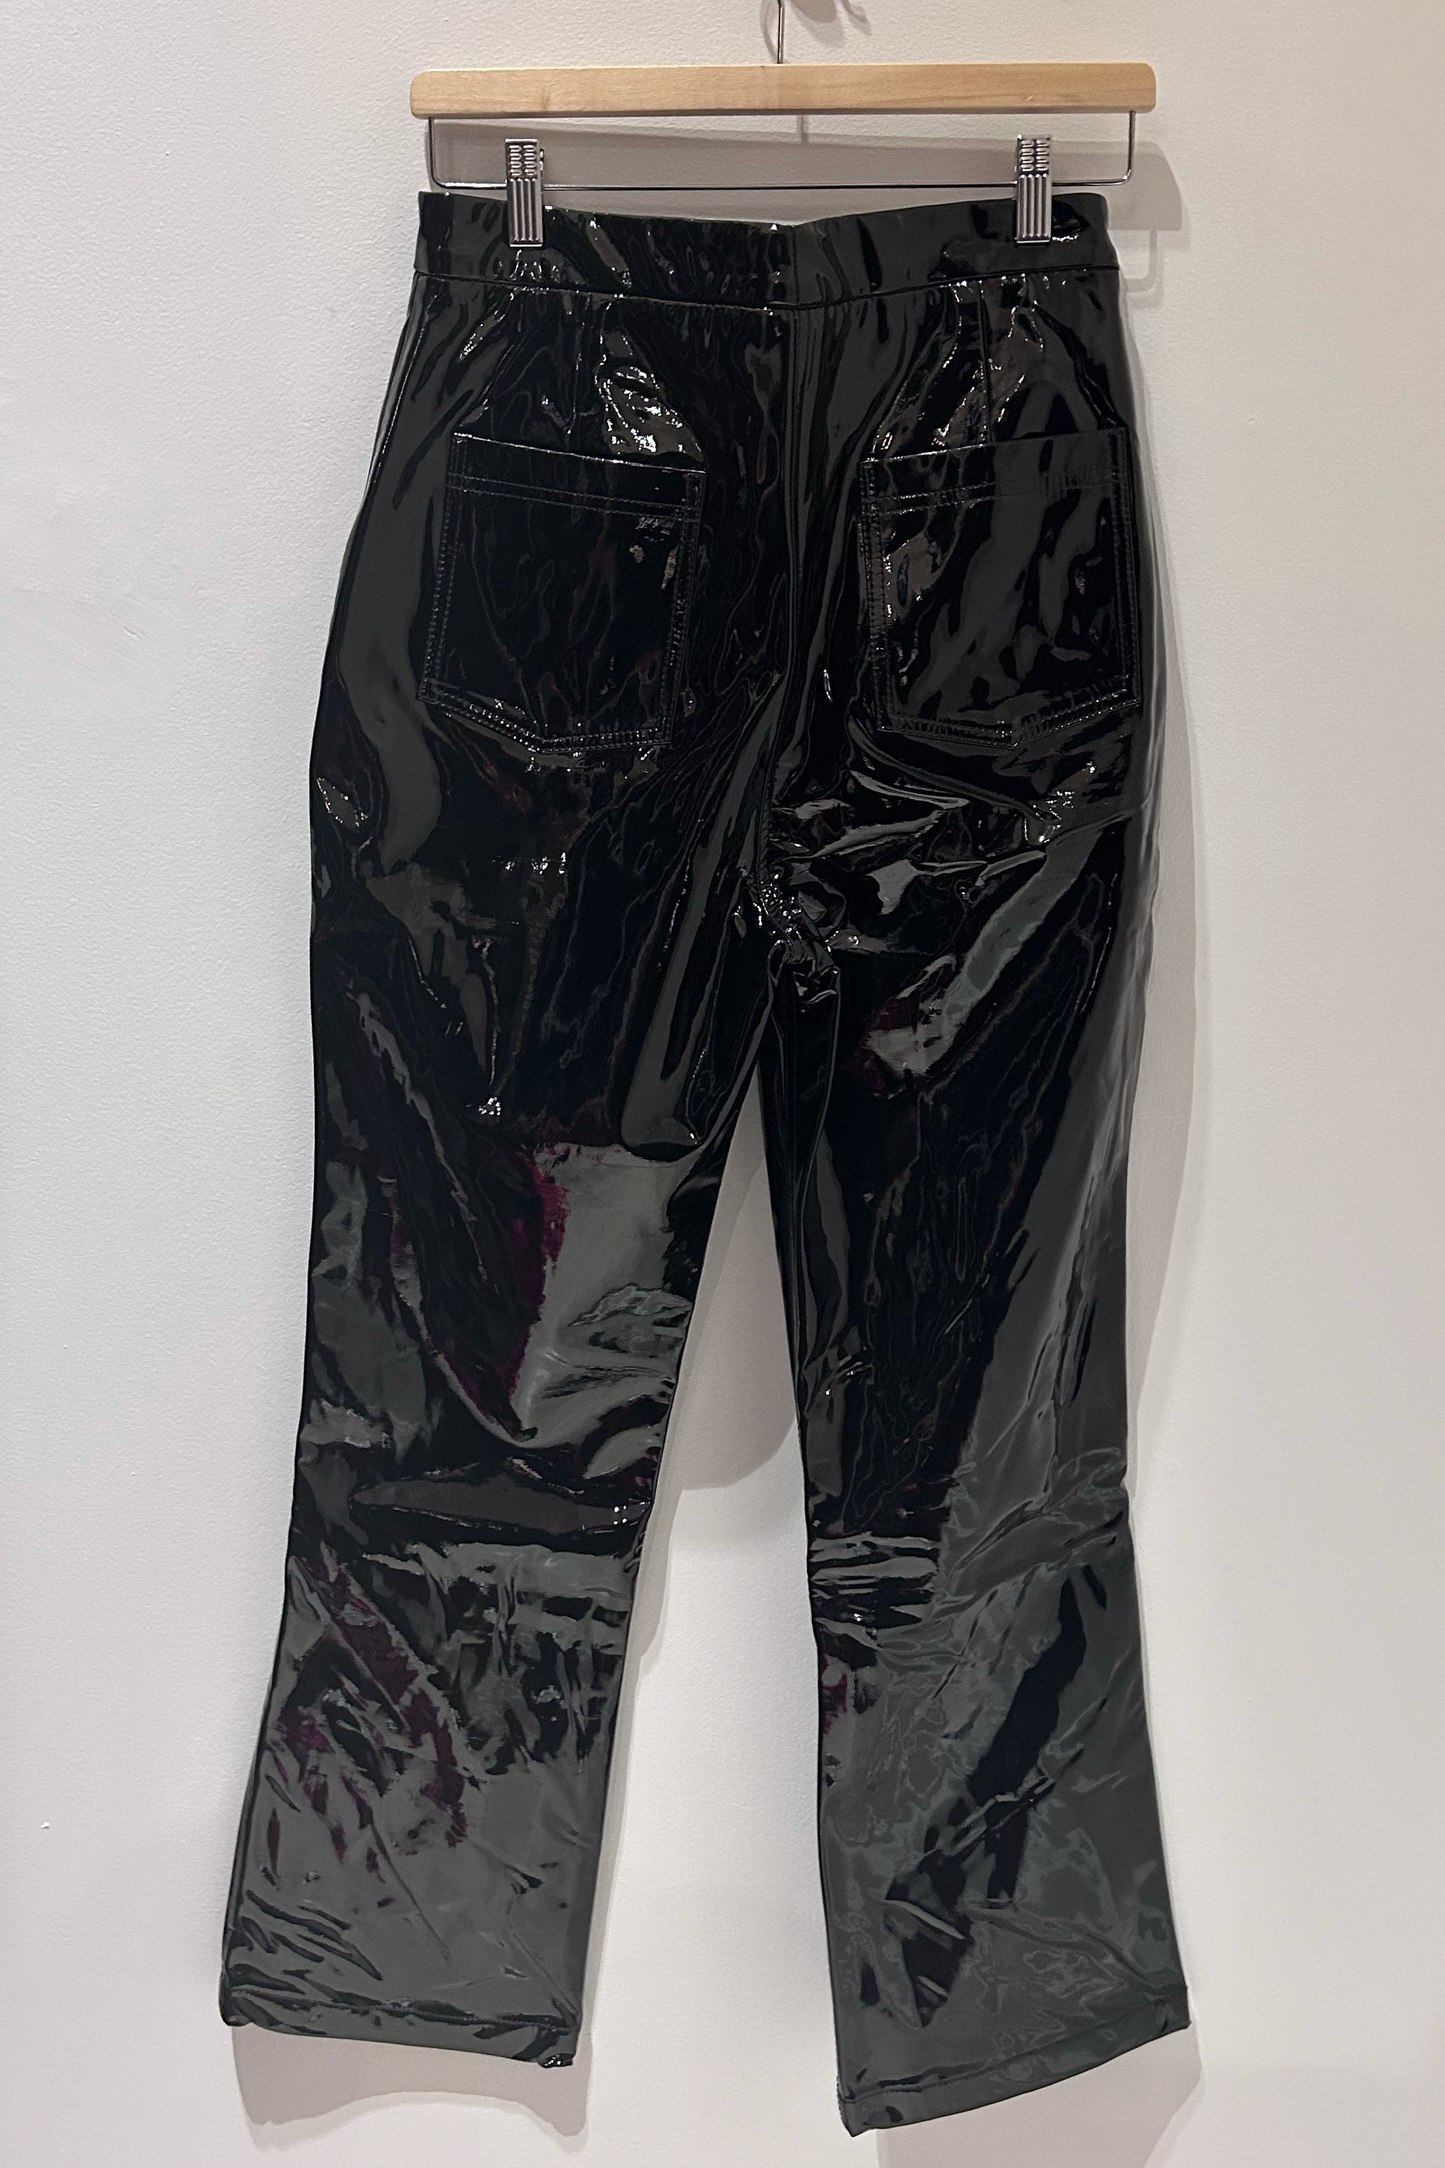 KGL - Glazed Pant: Black